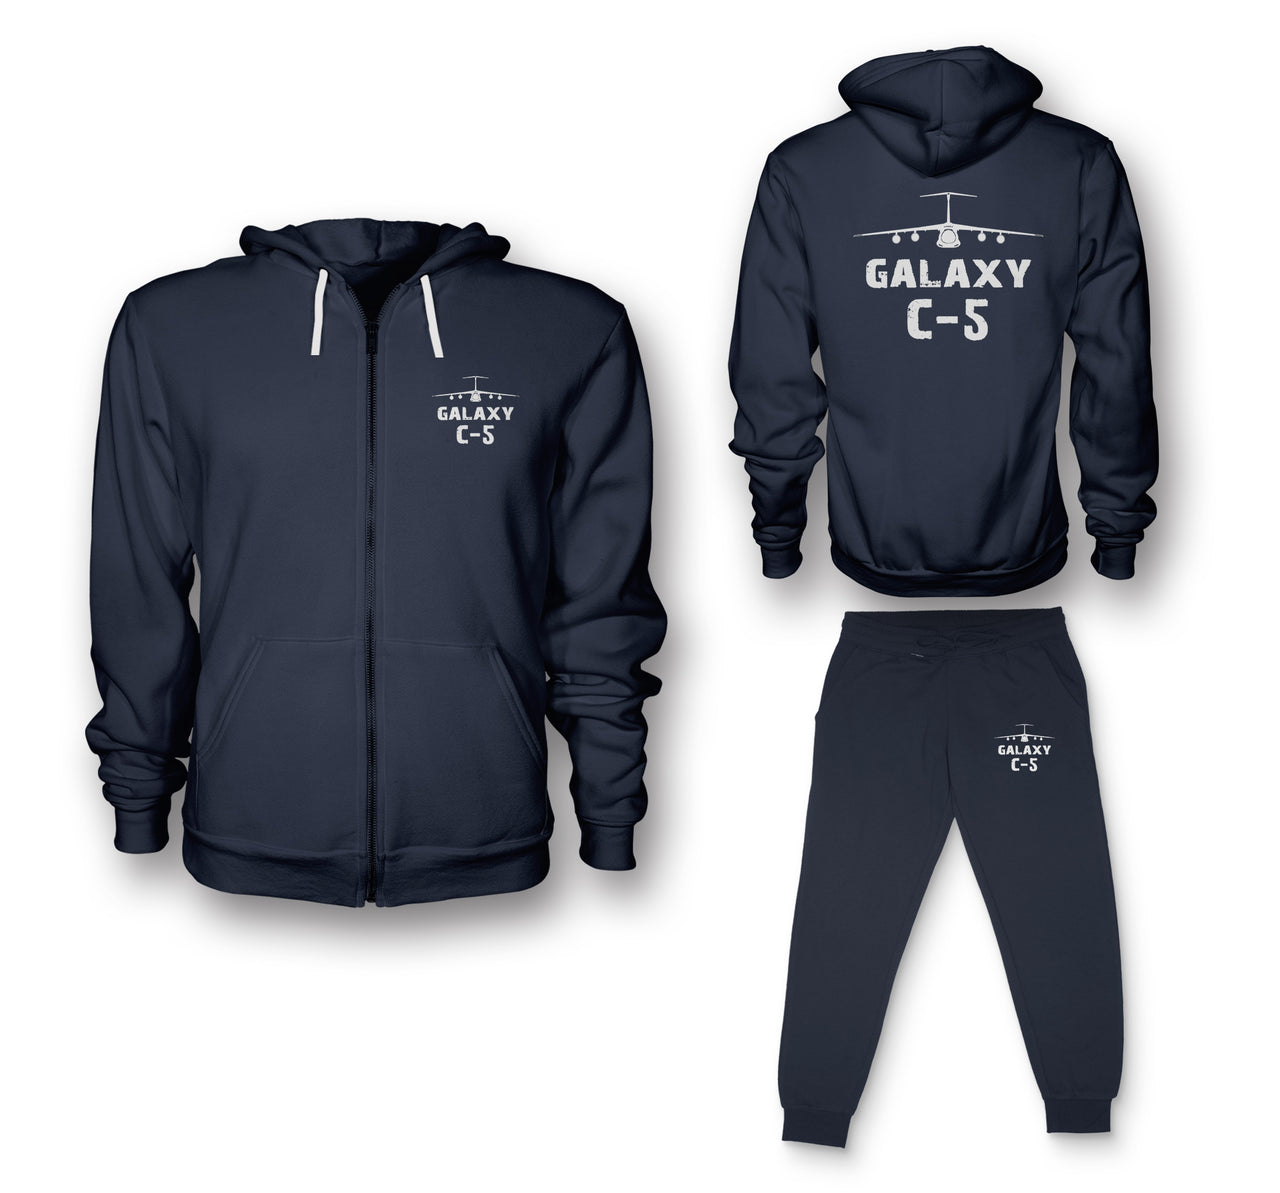 Galaxy C-5 & Plane Designed Zipped Hoodies & Sweatpants Set